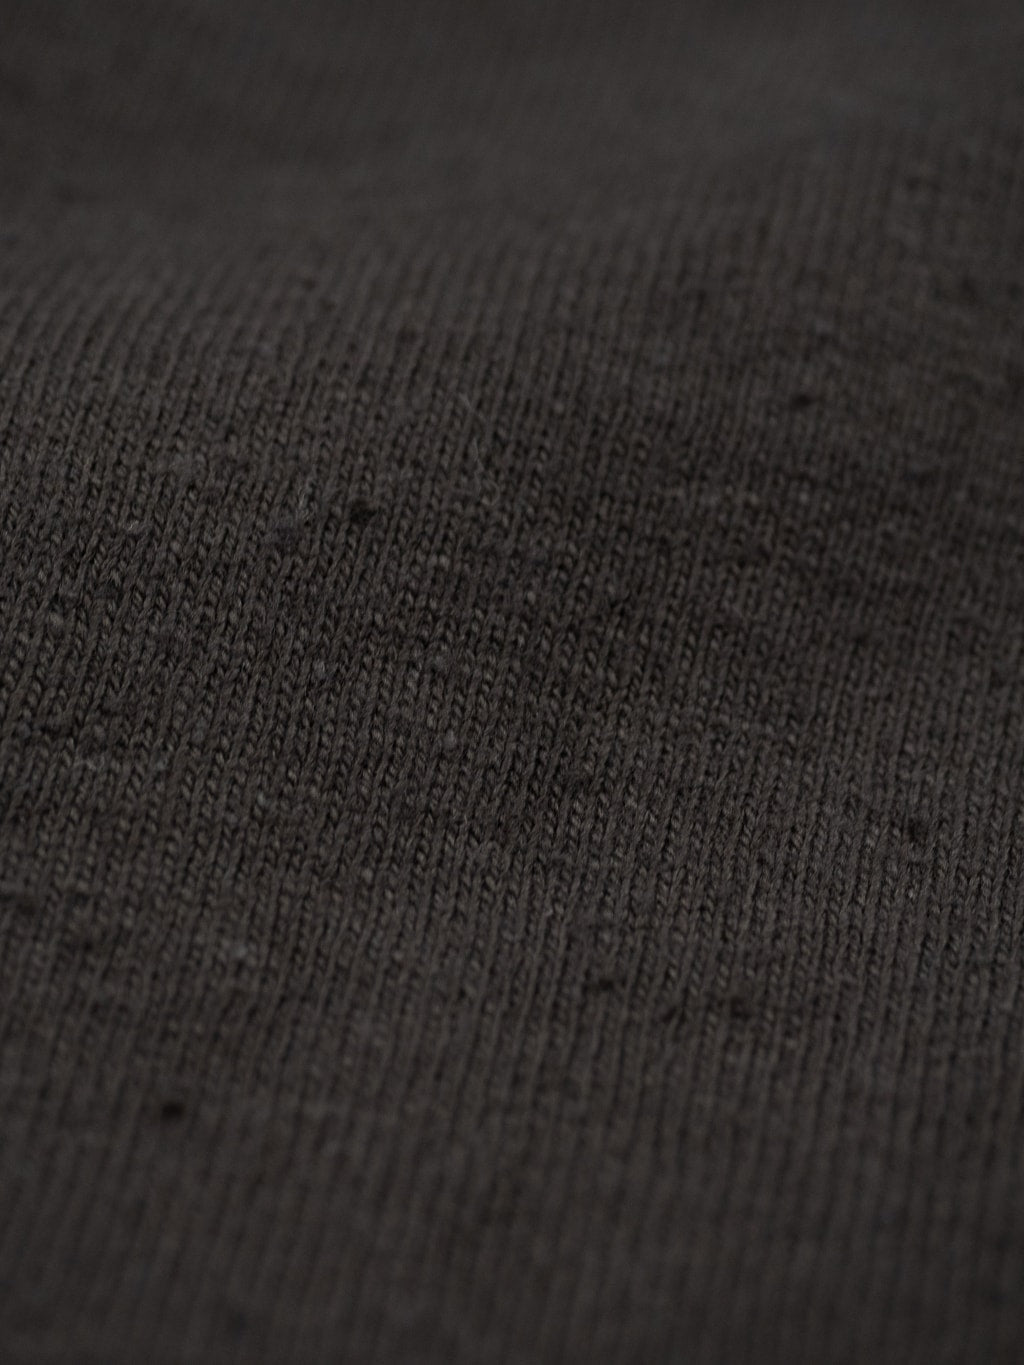 samurai jeans japanese cotton slub tshirt henley kuromame fabric